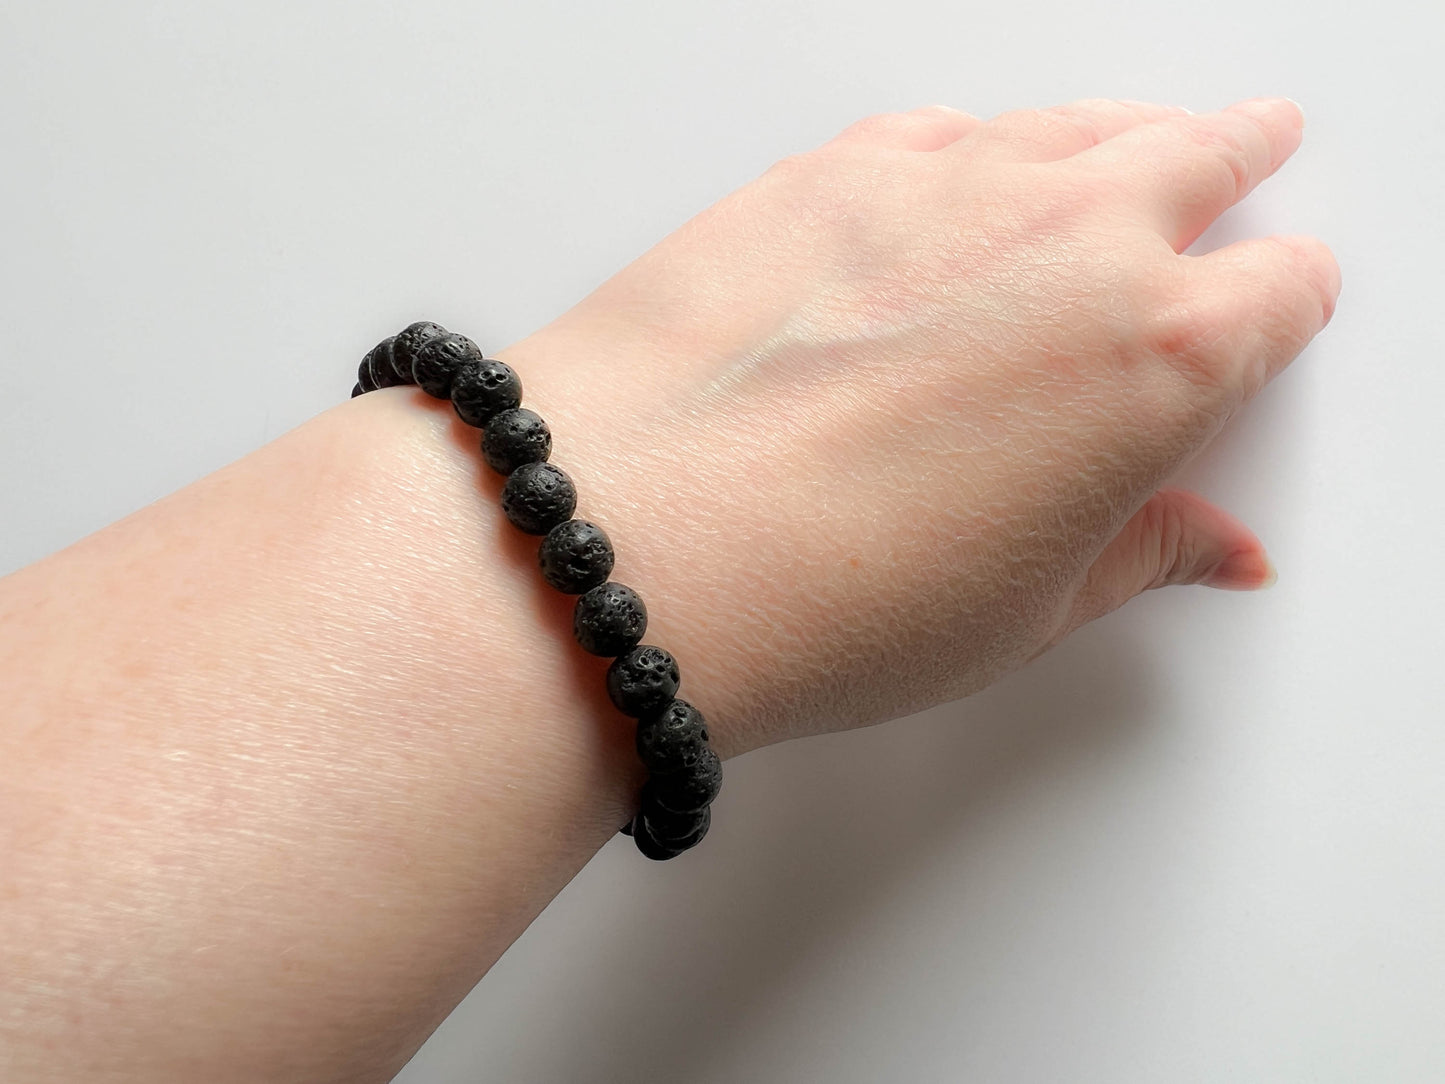 Black Lava stone bead bracelet - stretch - essential oil diffuser jewellery